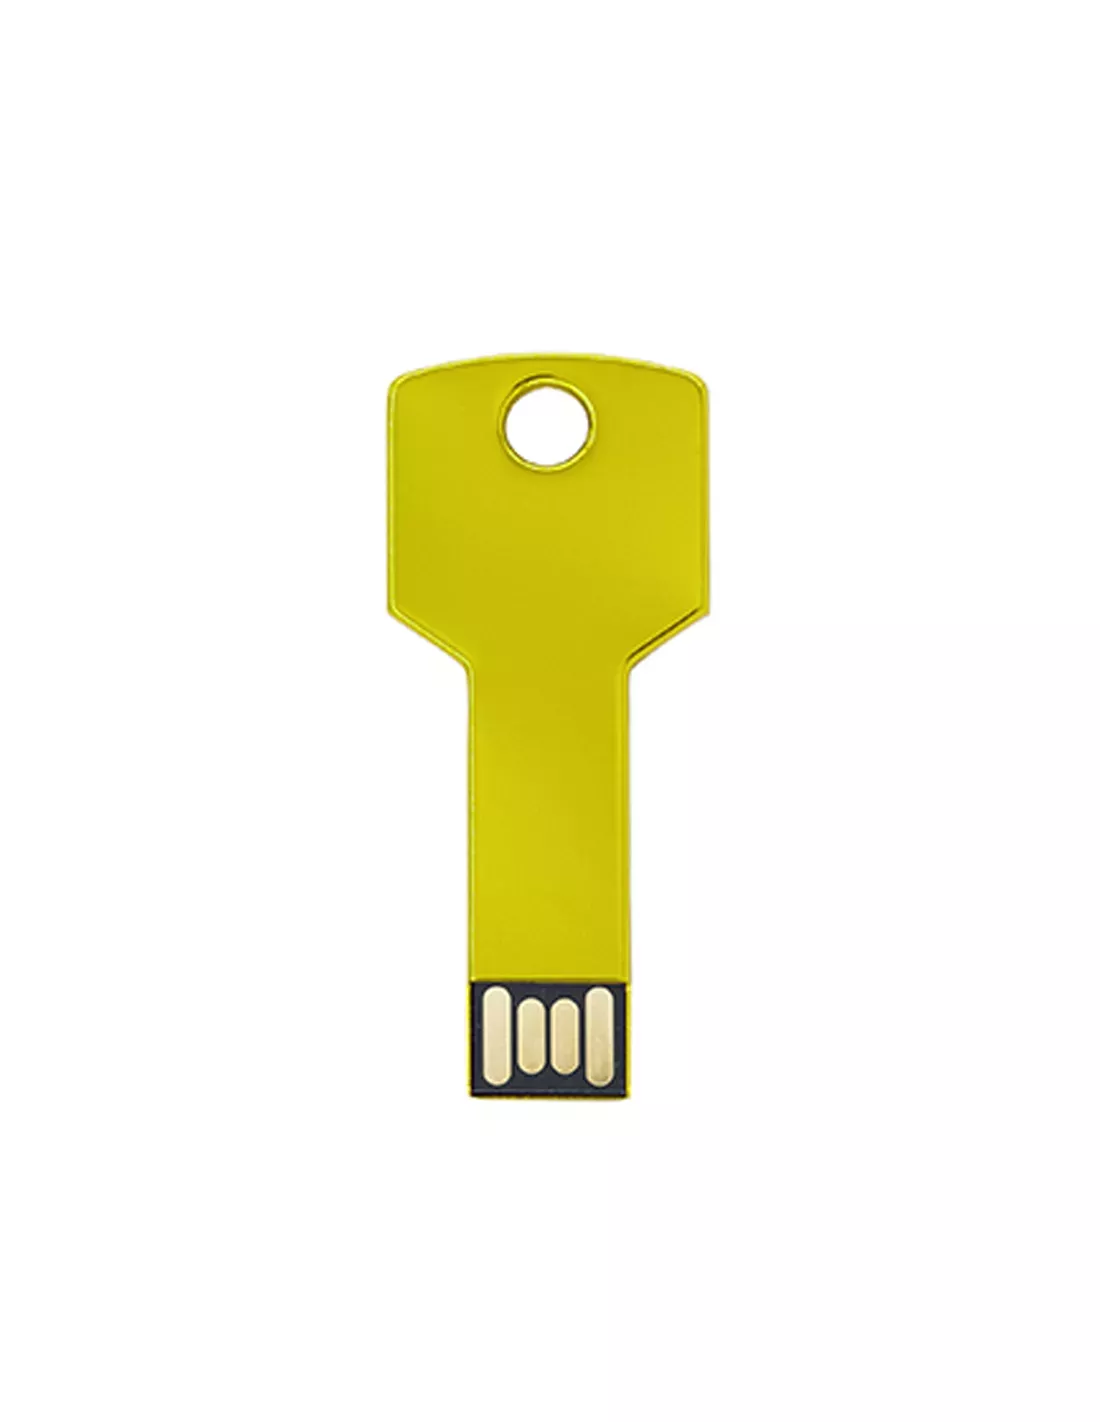 Pendrive extraplano (memoria USB) personalizado, formato llave  16GB CYCLON color (amarillo)